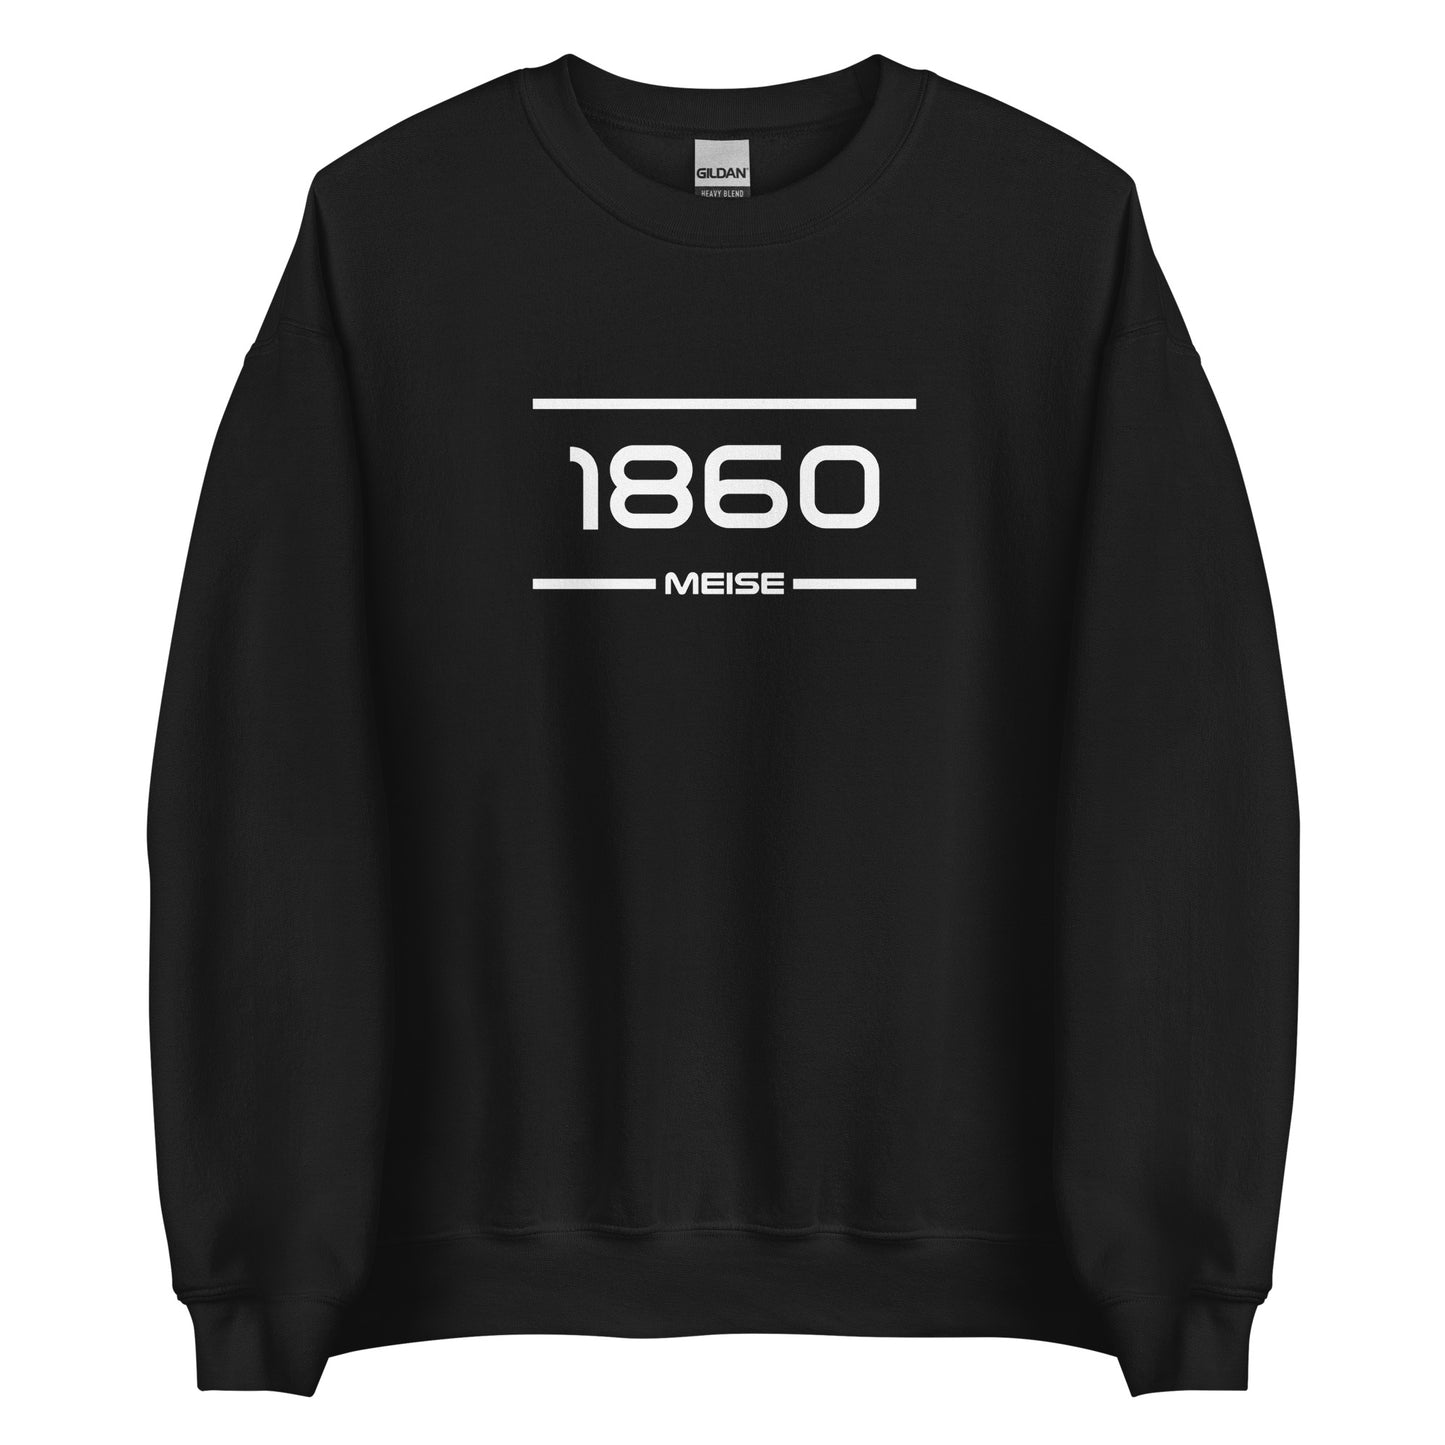 Sweater - 1860 - Meise (M/V)